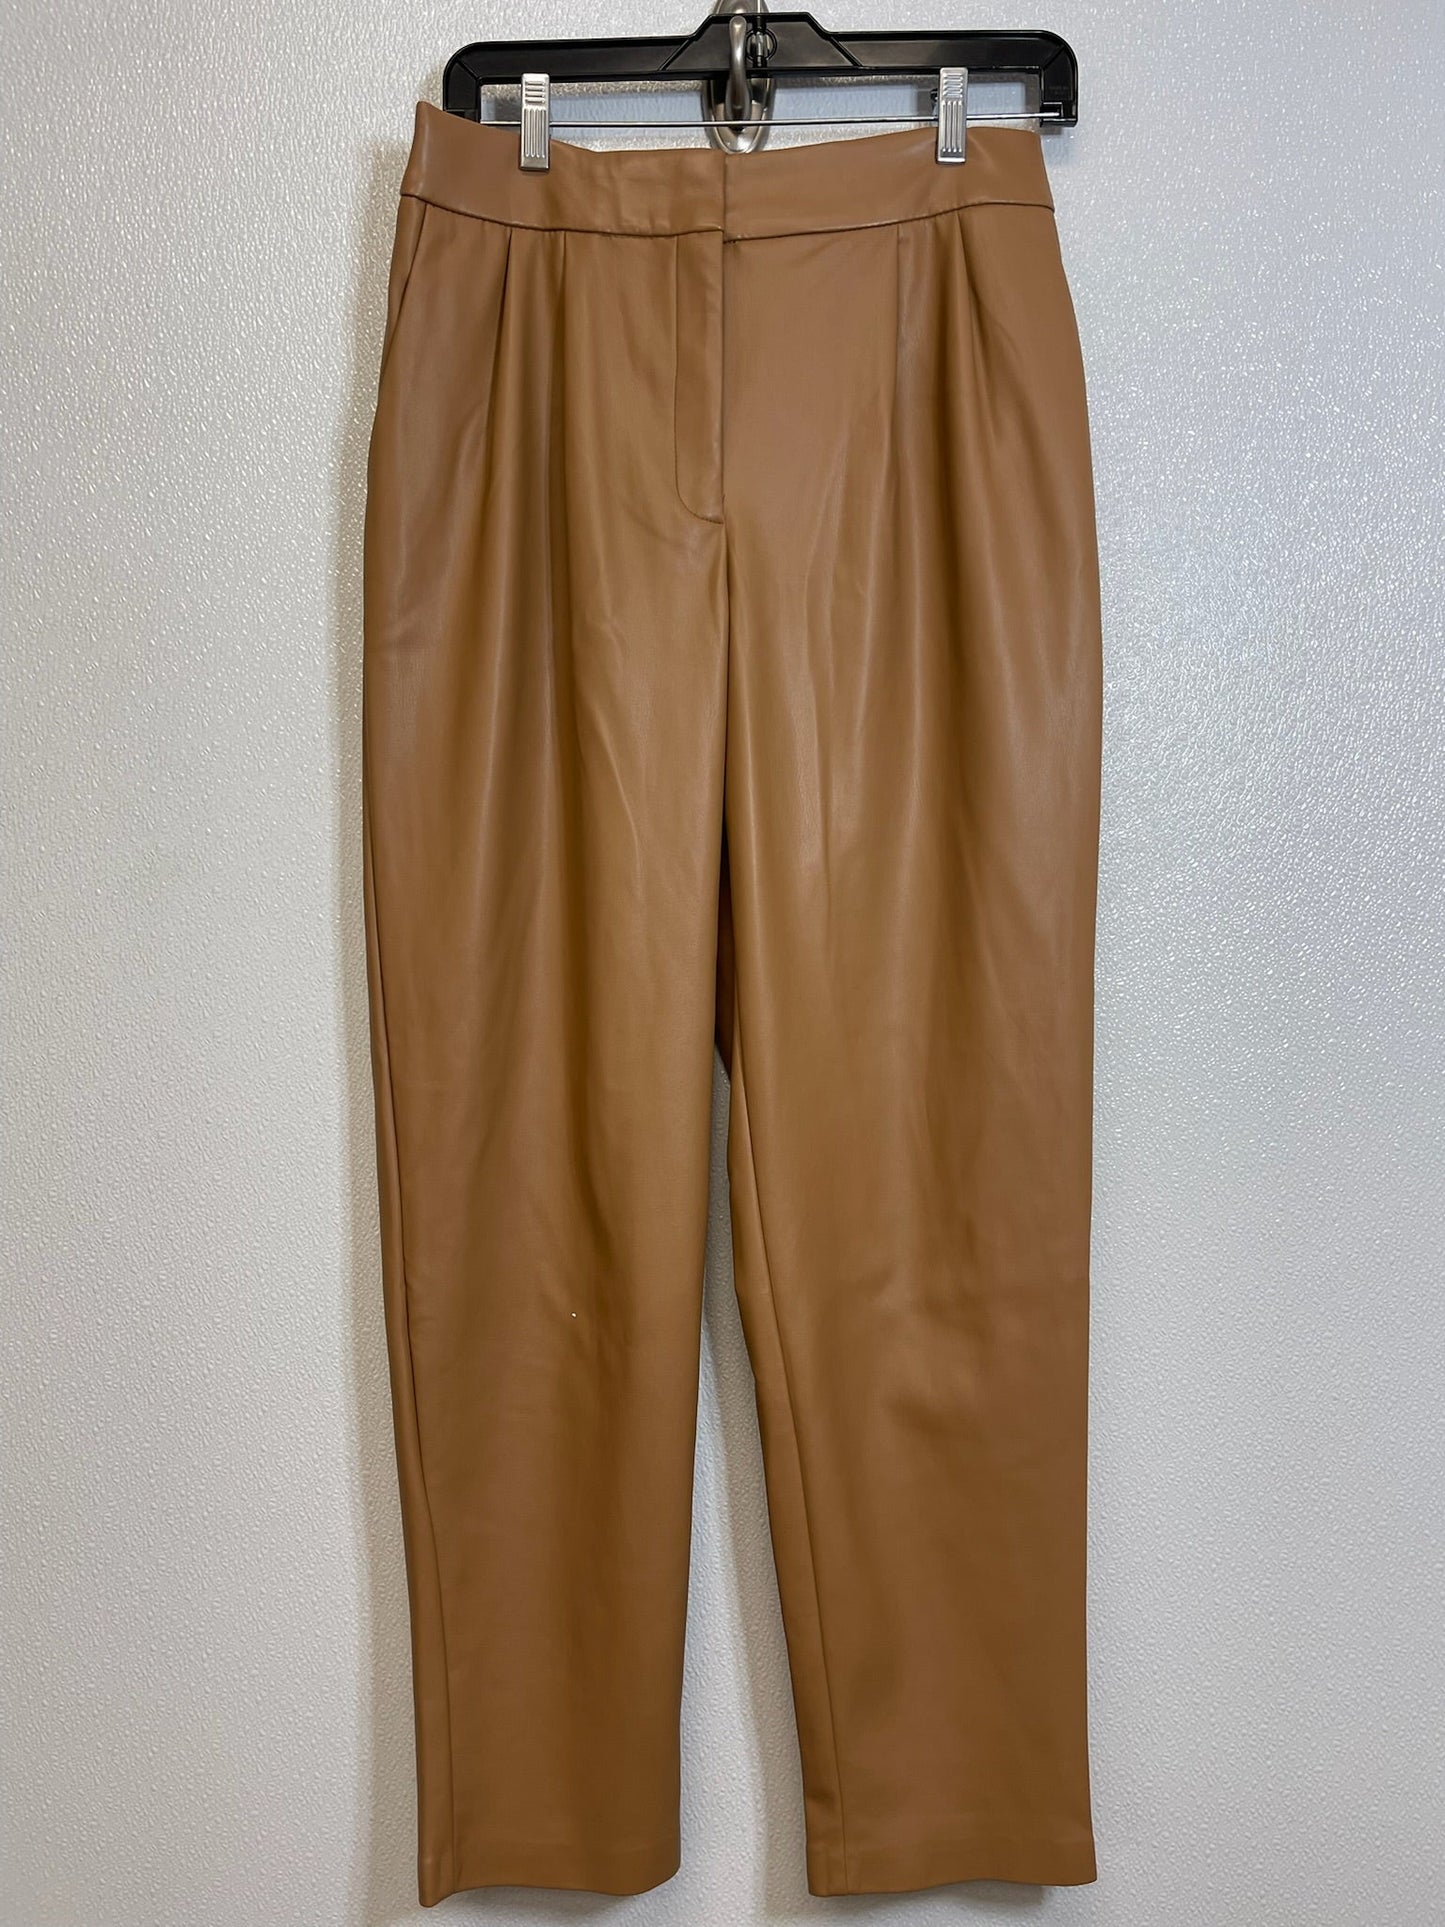 Tan Pants Work/dress Express O, Size 6